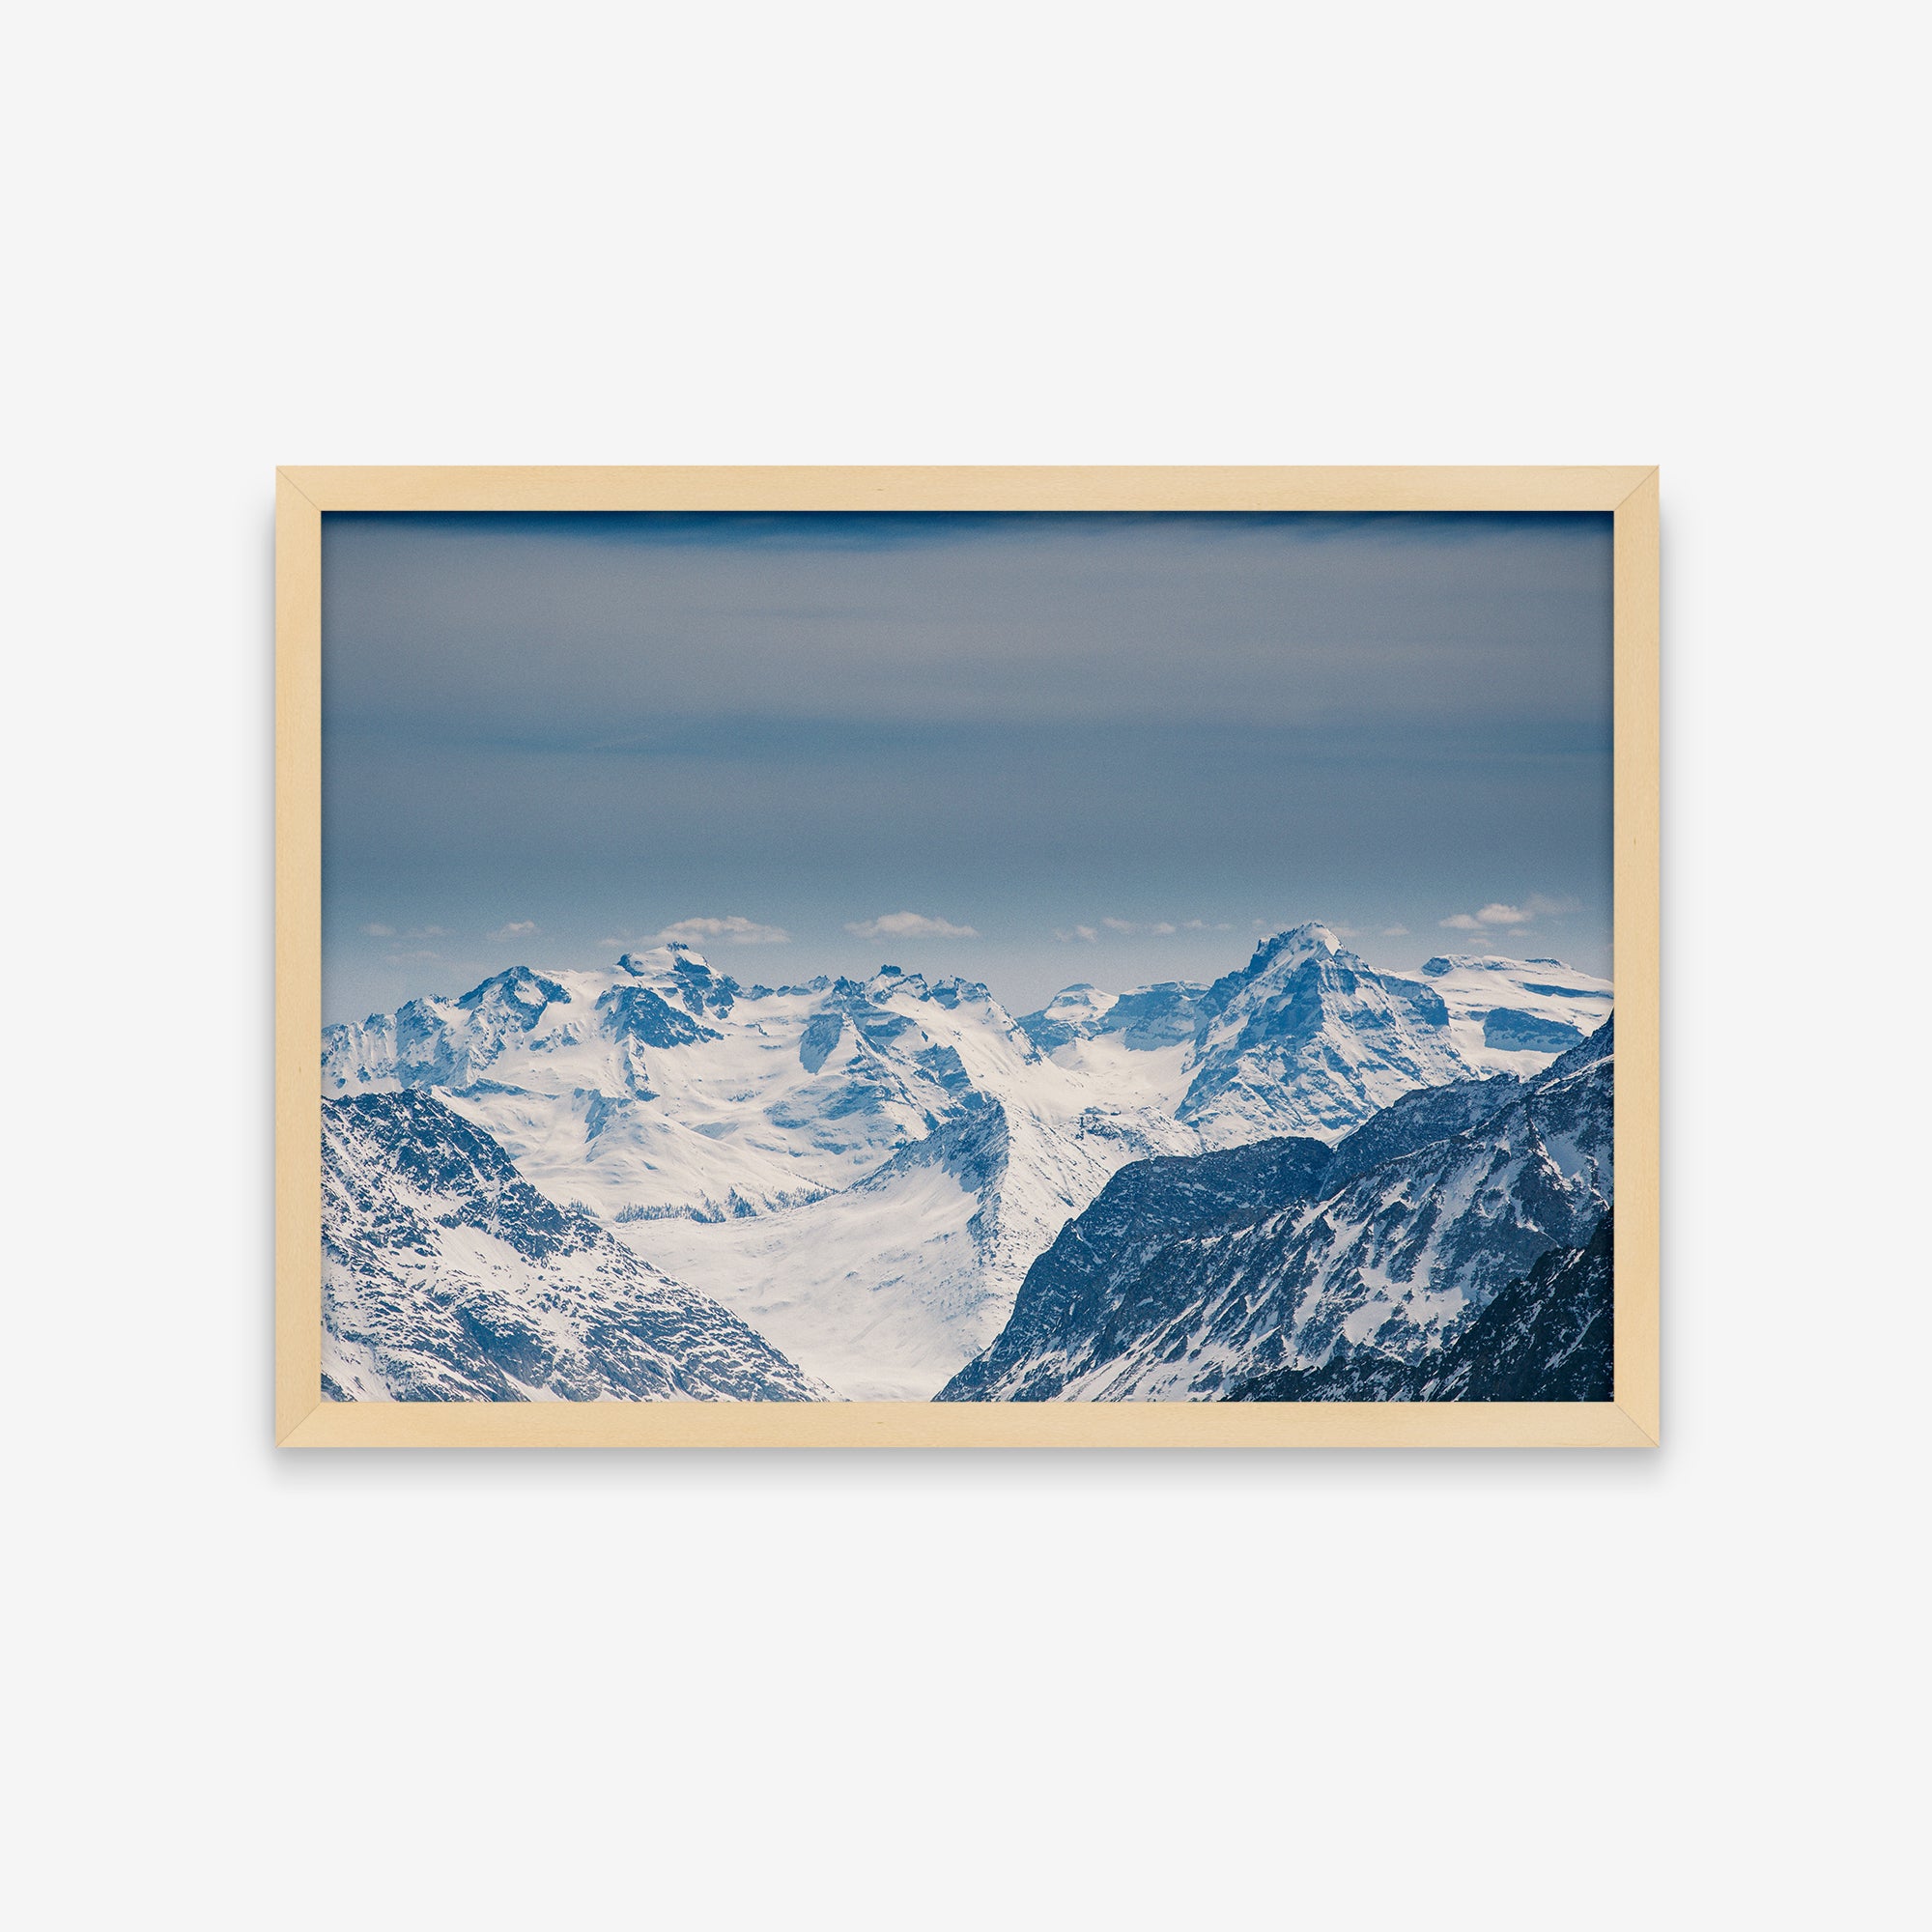 Paisagens - Snow montains